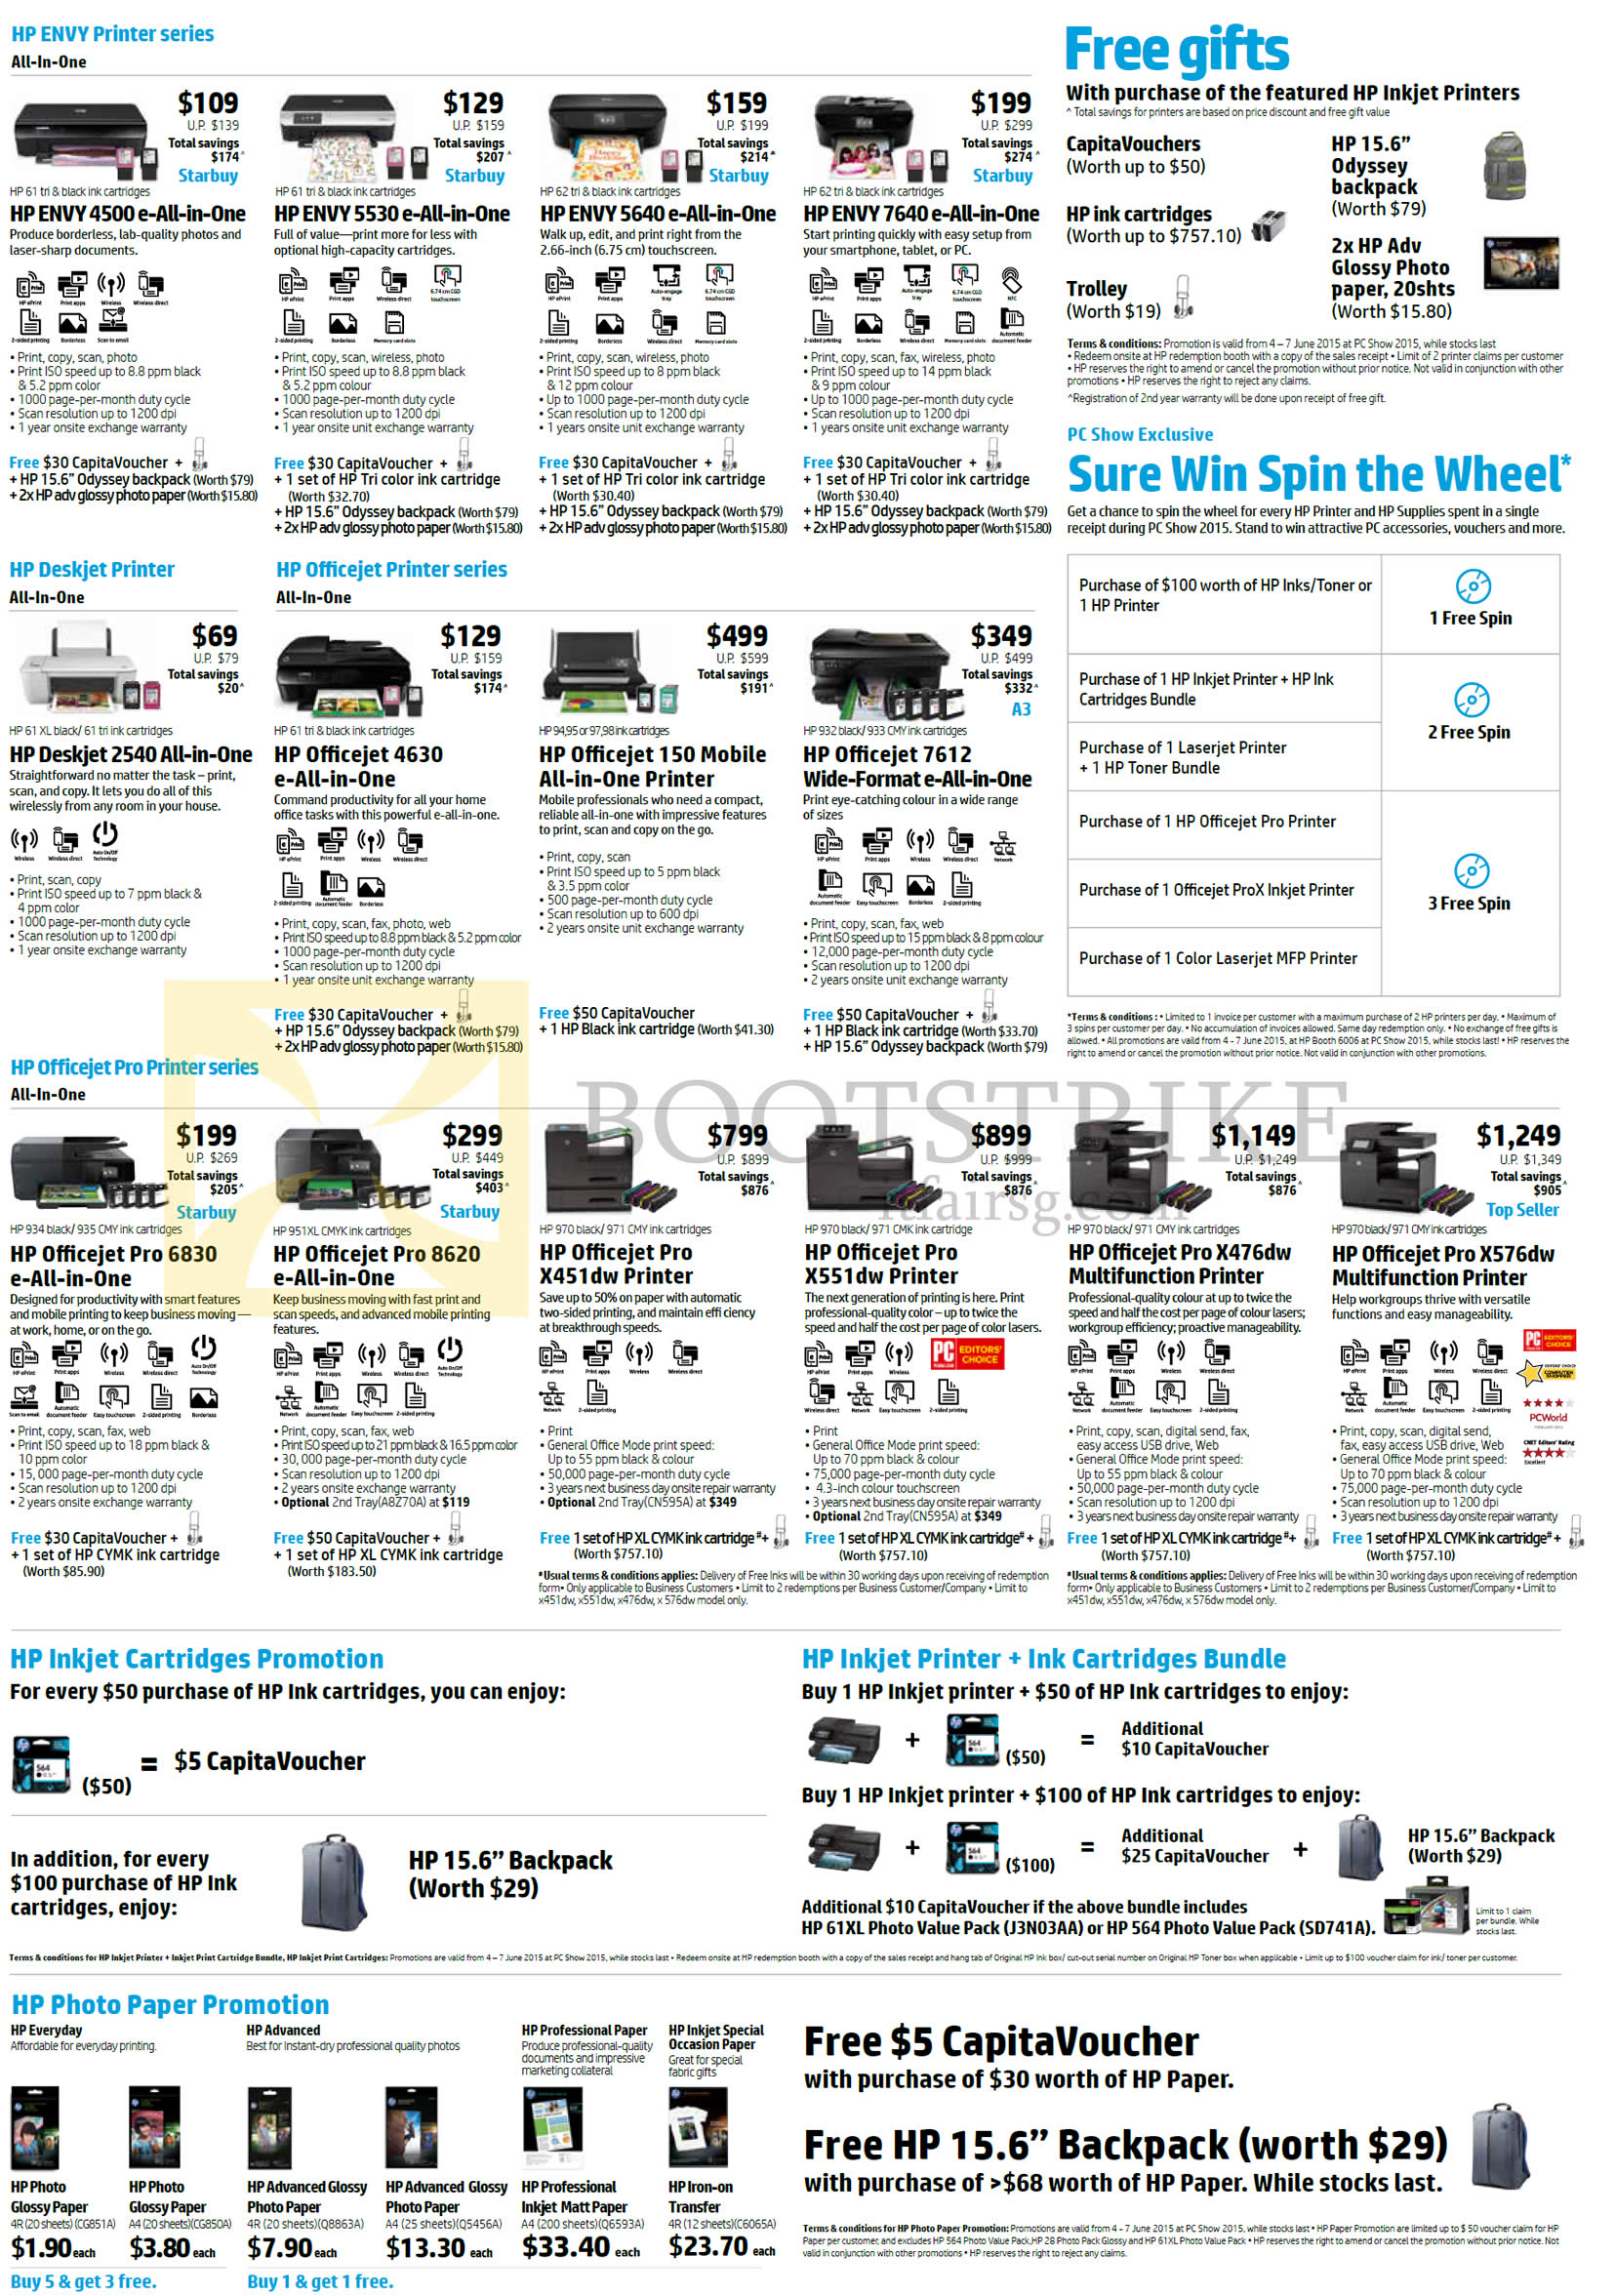 PC SHOW 2015 price list image brochure of HP Printers Envy All-In-One, Deskjet, Officejet, Pro Printer, Photo Paper